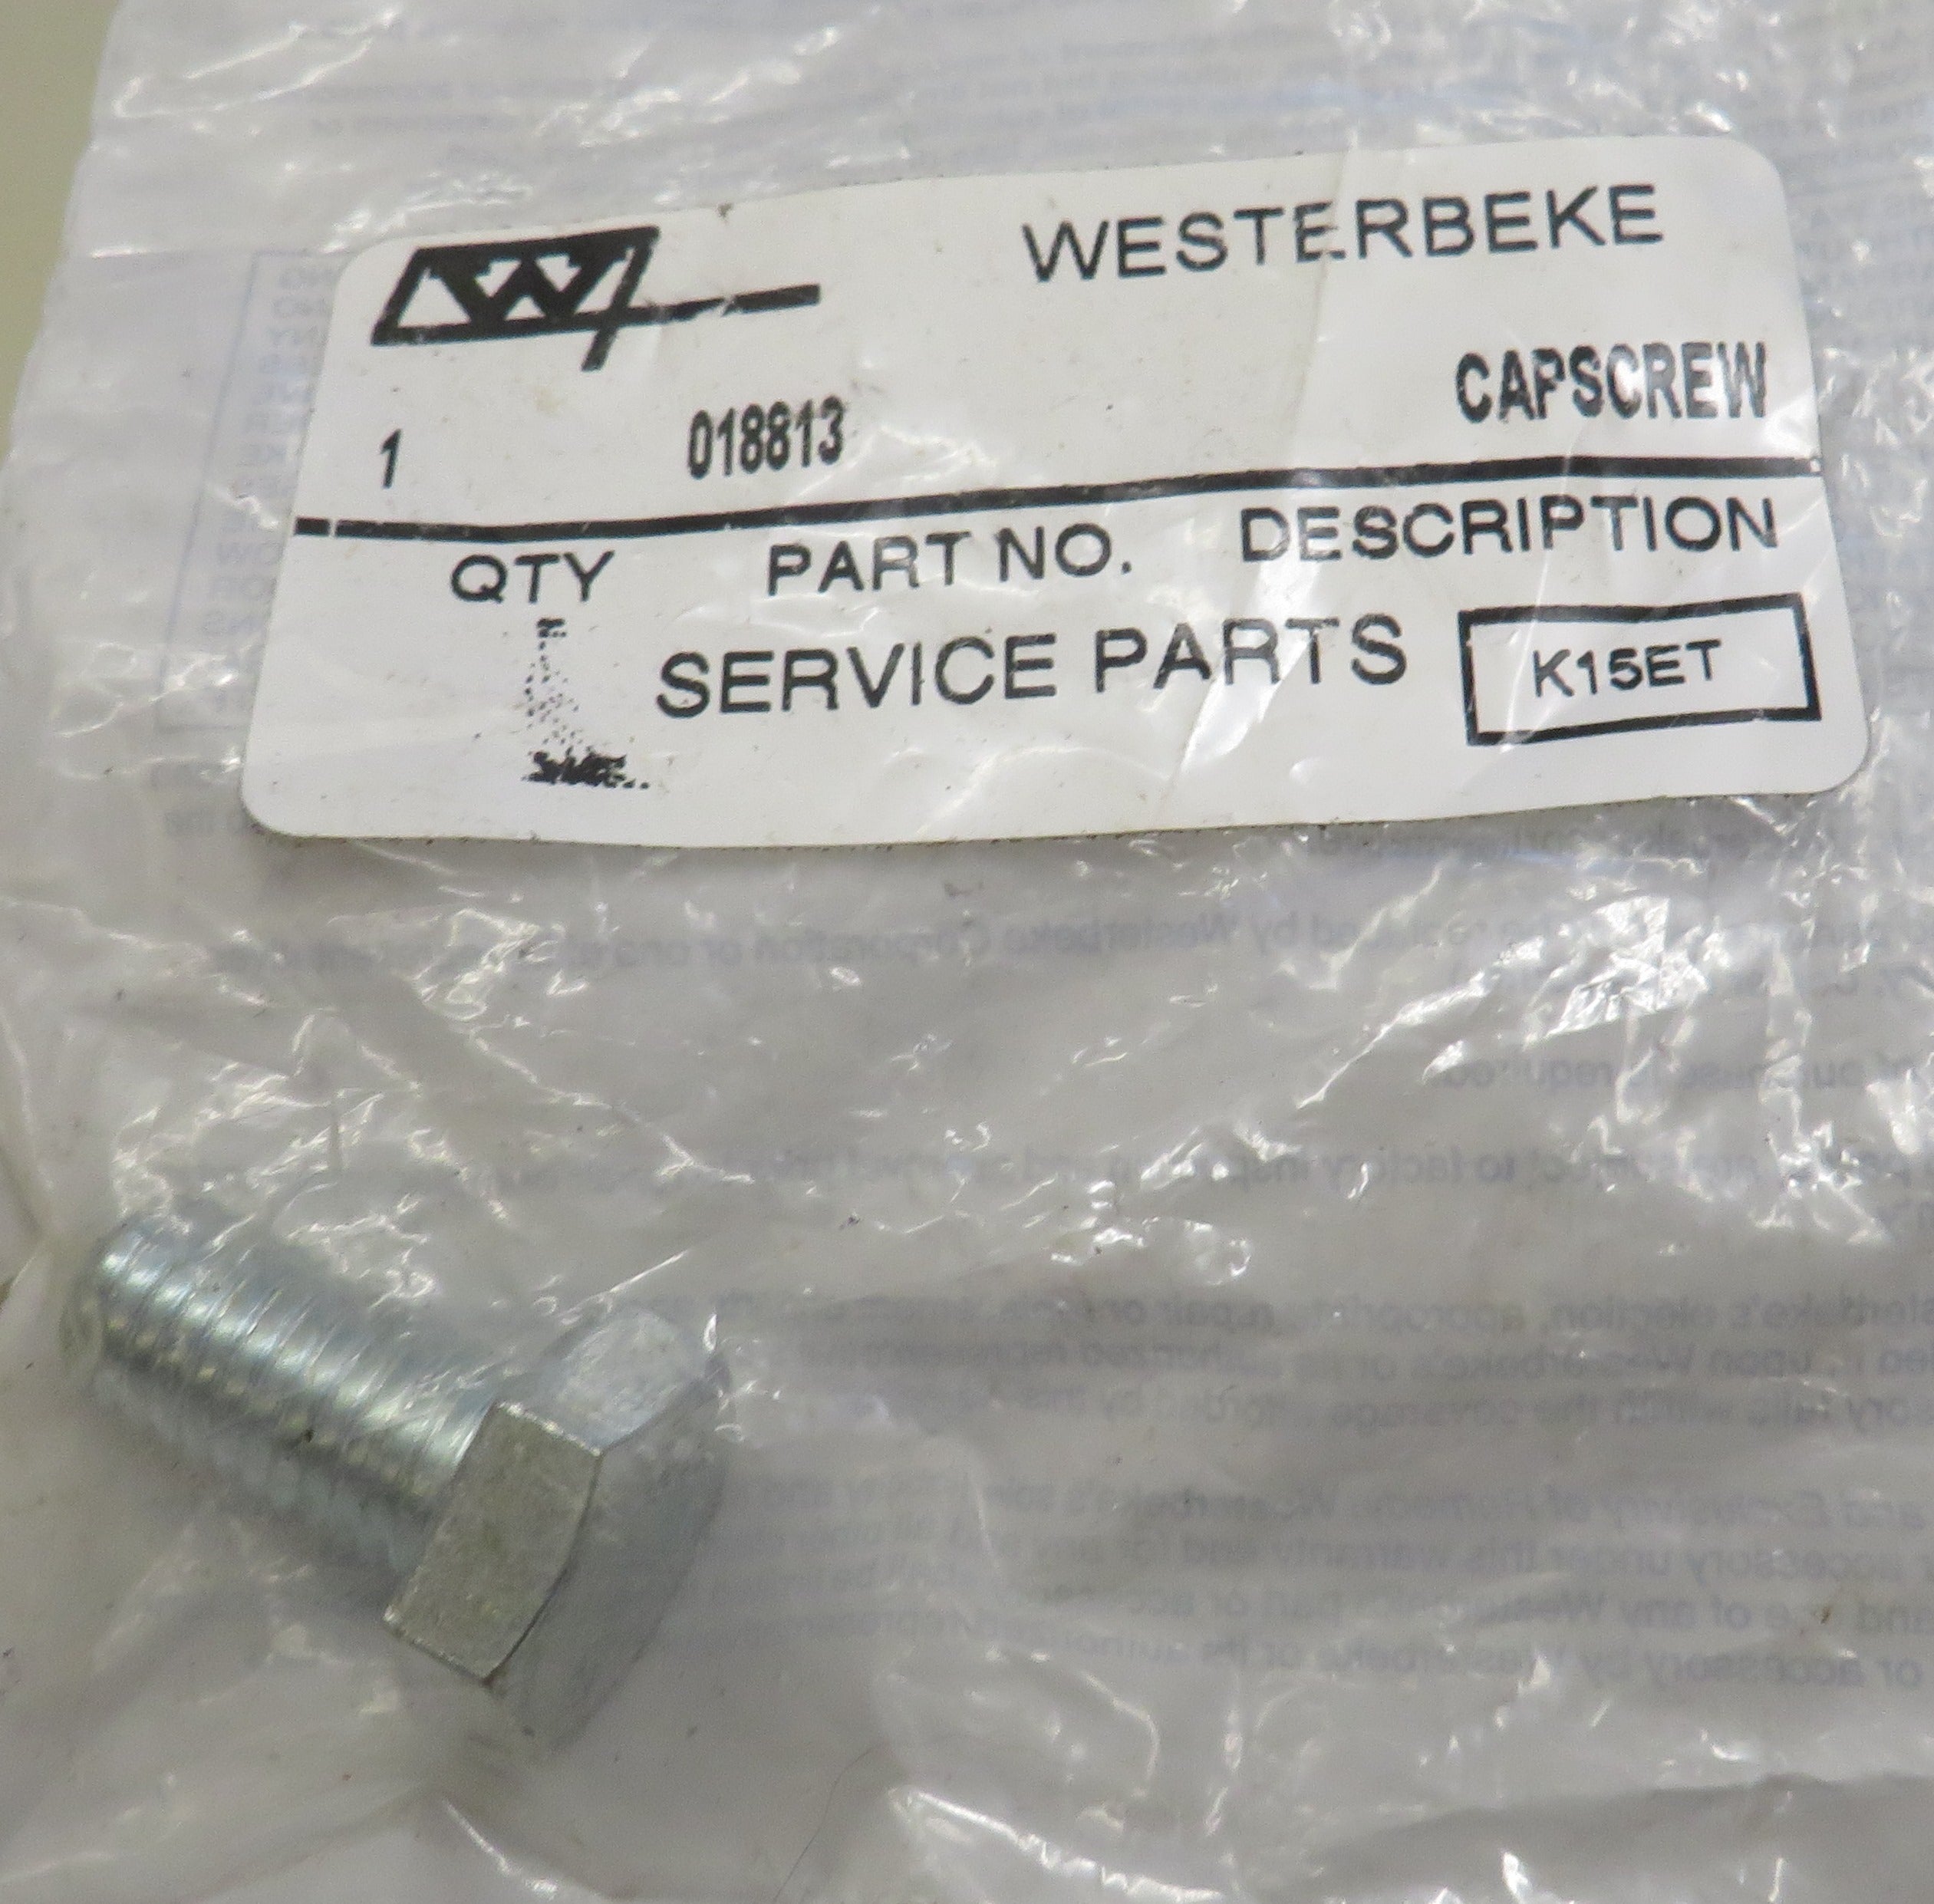 18813 Westerbeke Cap Screw M10x20 DIN 933